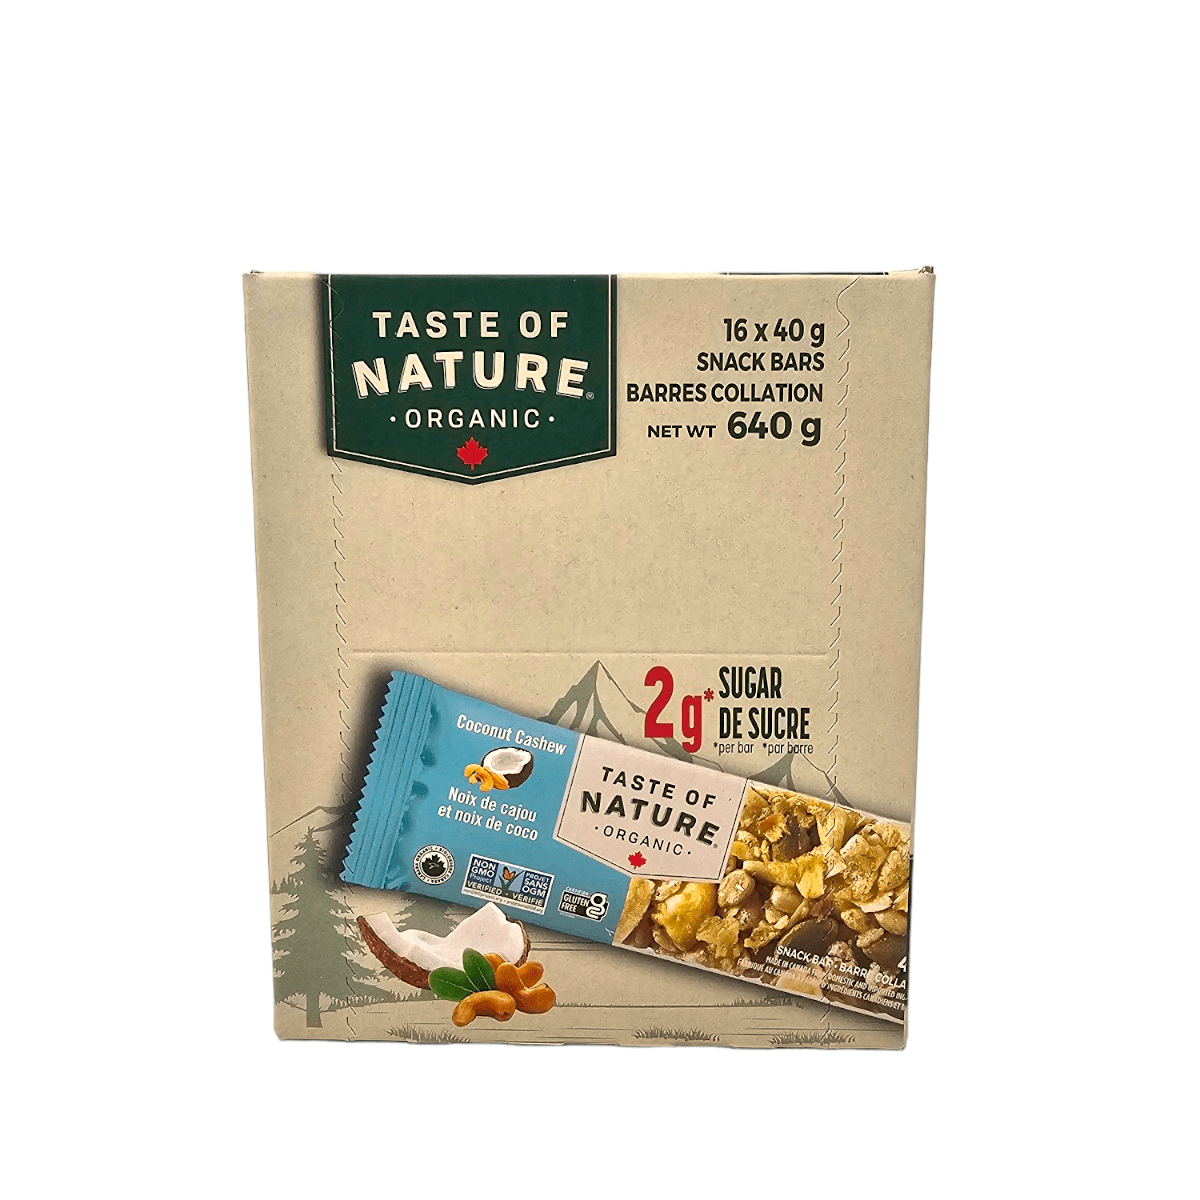 Taste Of Nature Snack Bars Coconut Cashew (16x40g)